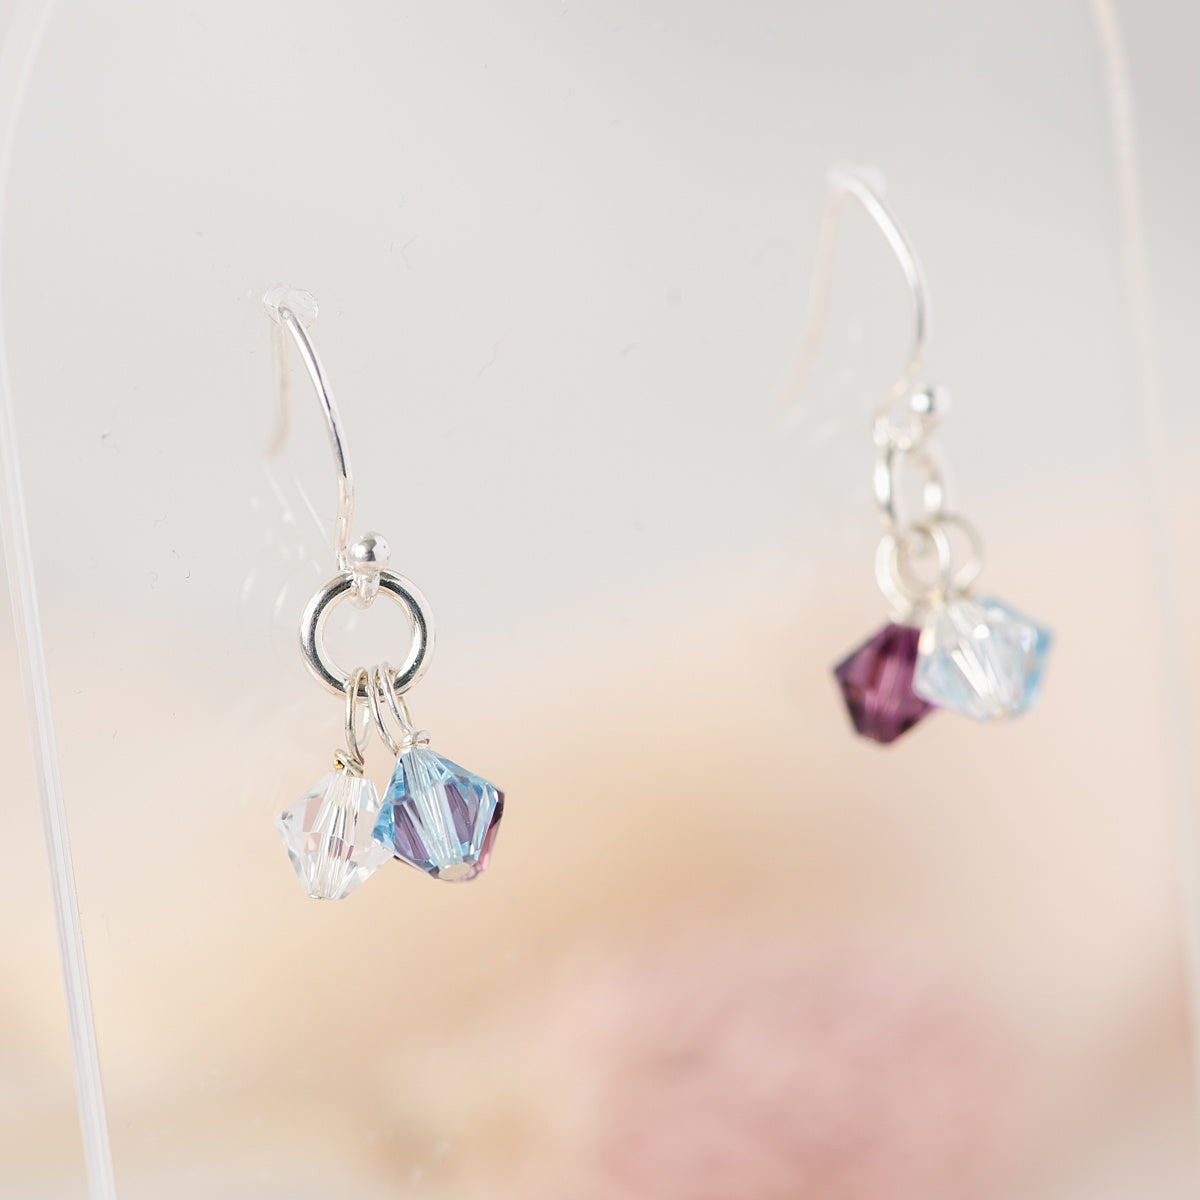 Swarovski Elements Long Earrings NWT | Swarovski jewelry earrings, Swarovski  crystal dangle earrings, Swarovski earrings